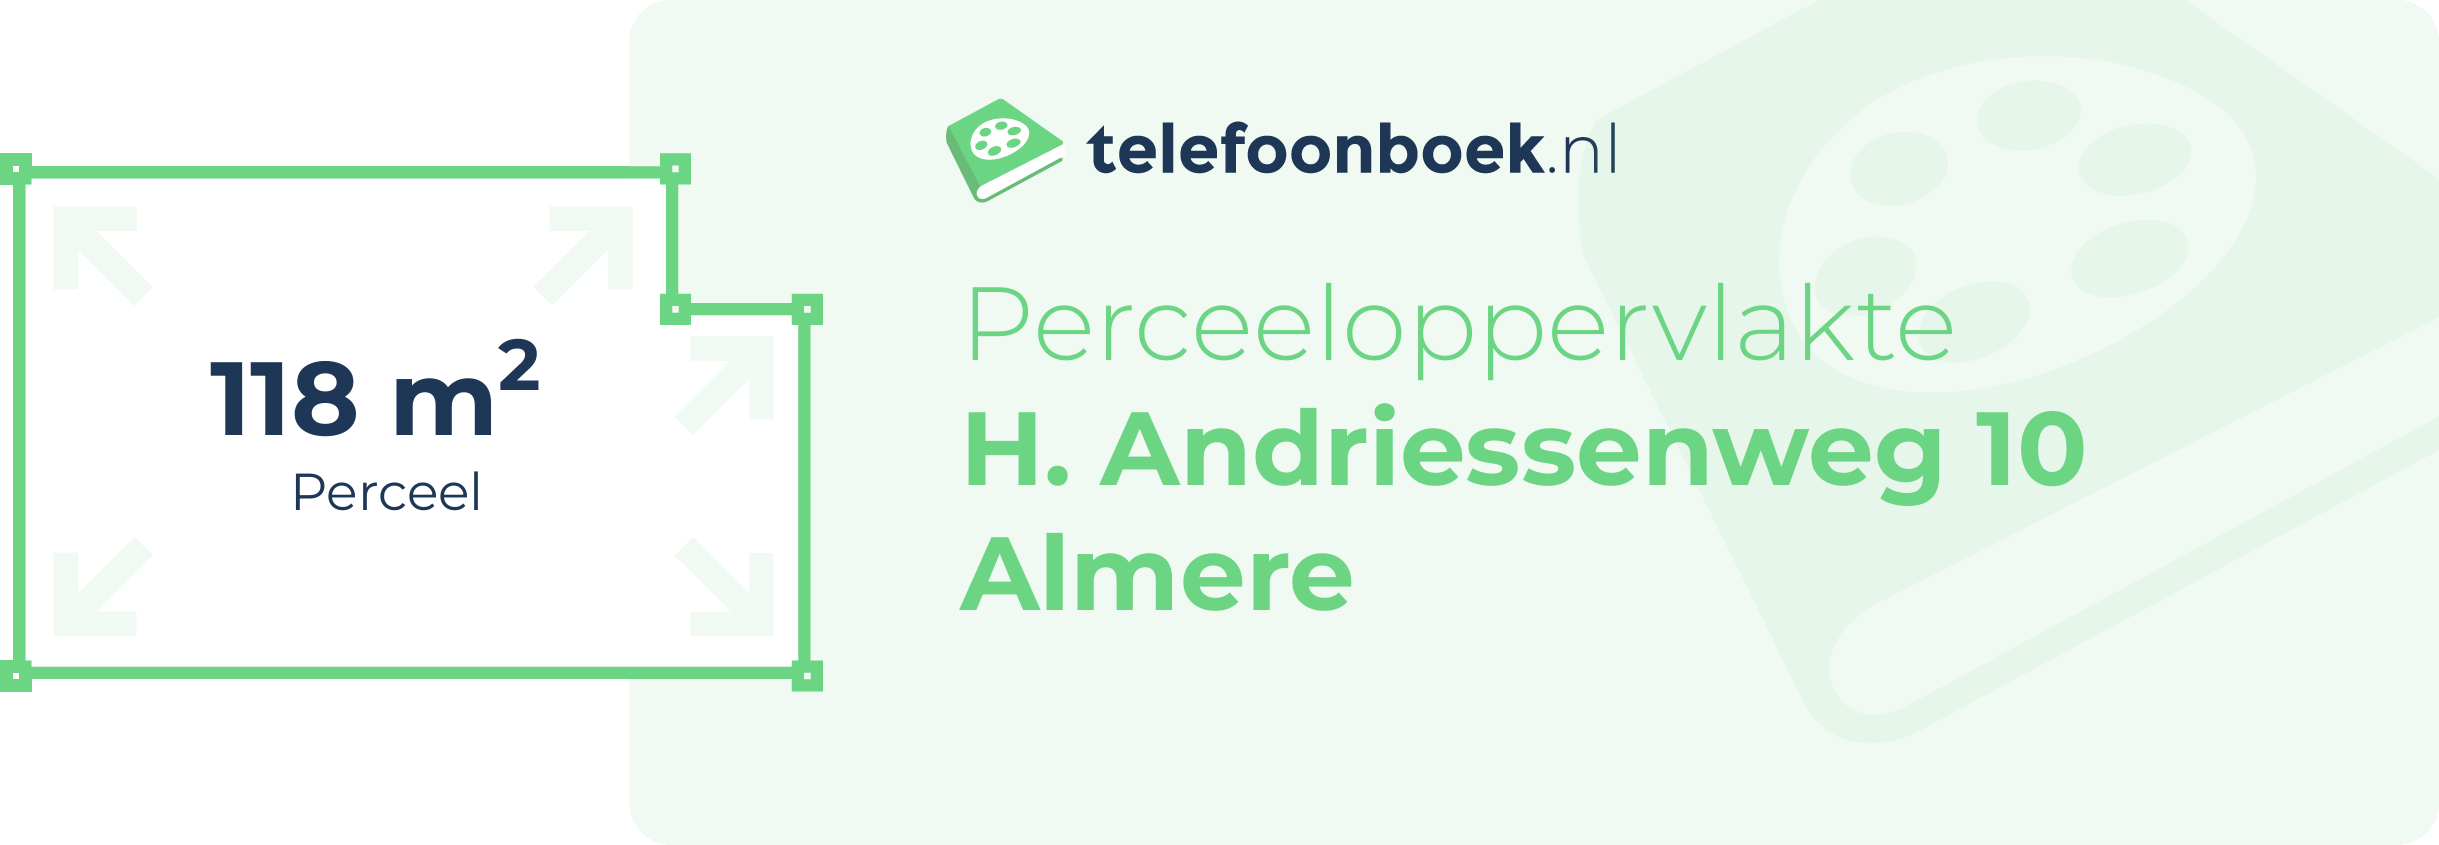 Perceeloppervlakte H. Andriessenweg 10 Almere